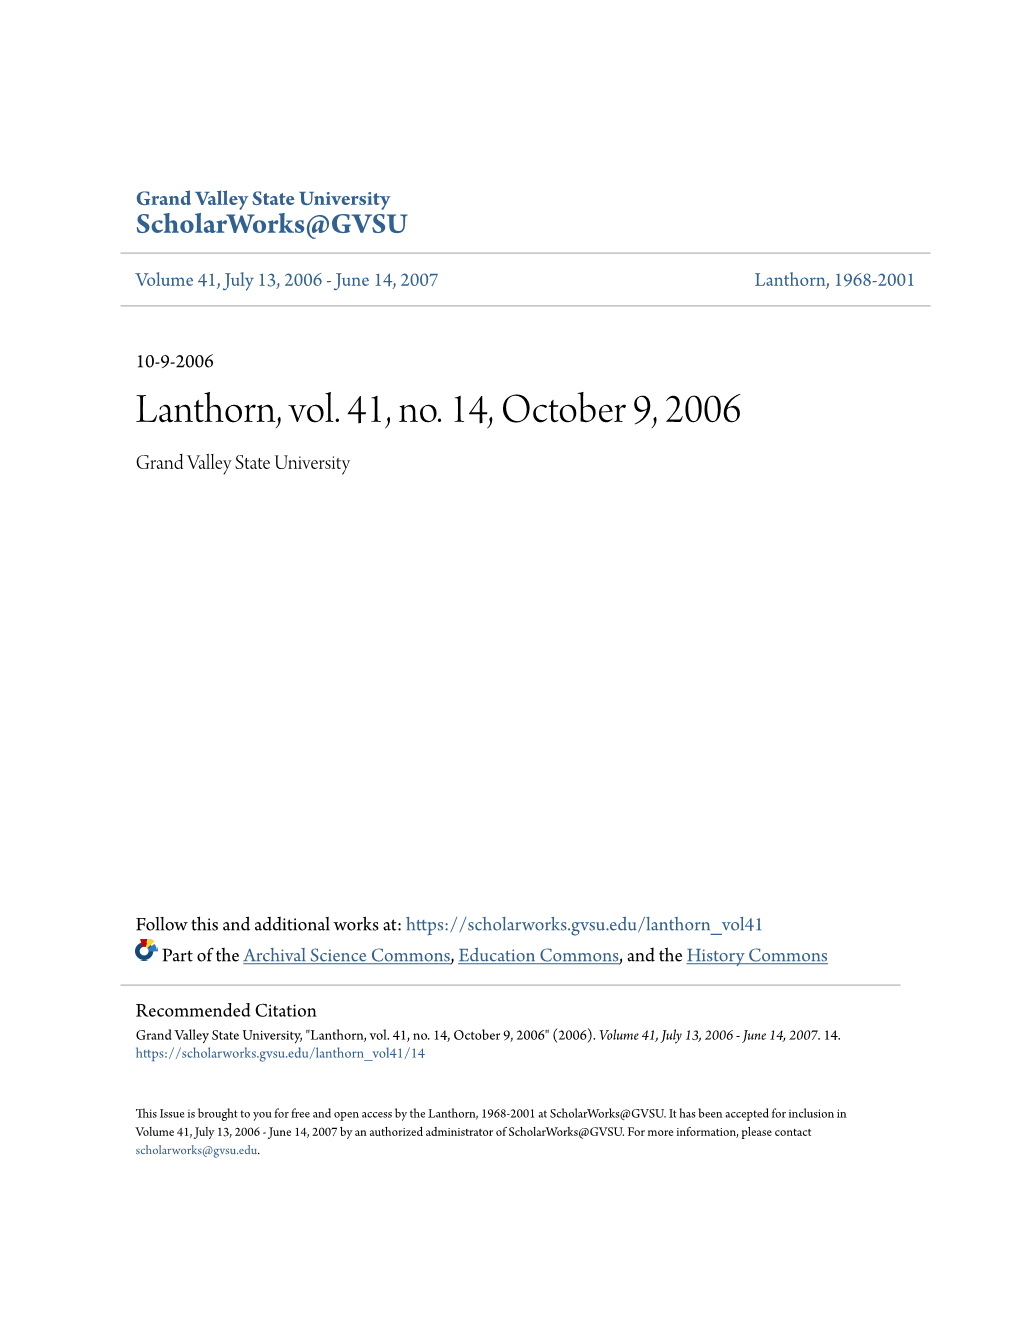 Lanthorn, Vol. 41, No. 14, October 9, 2006 Grand Valley State University